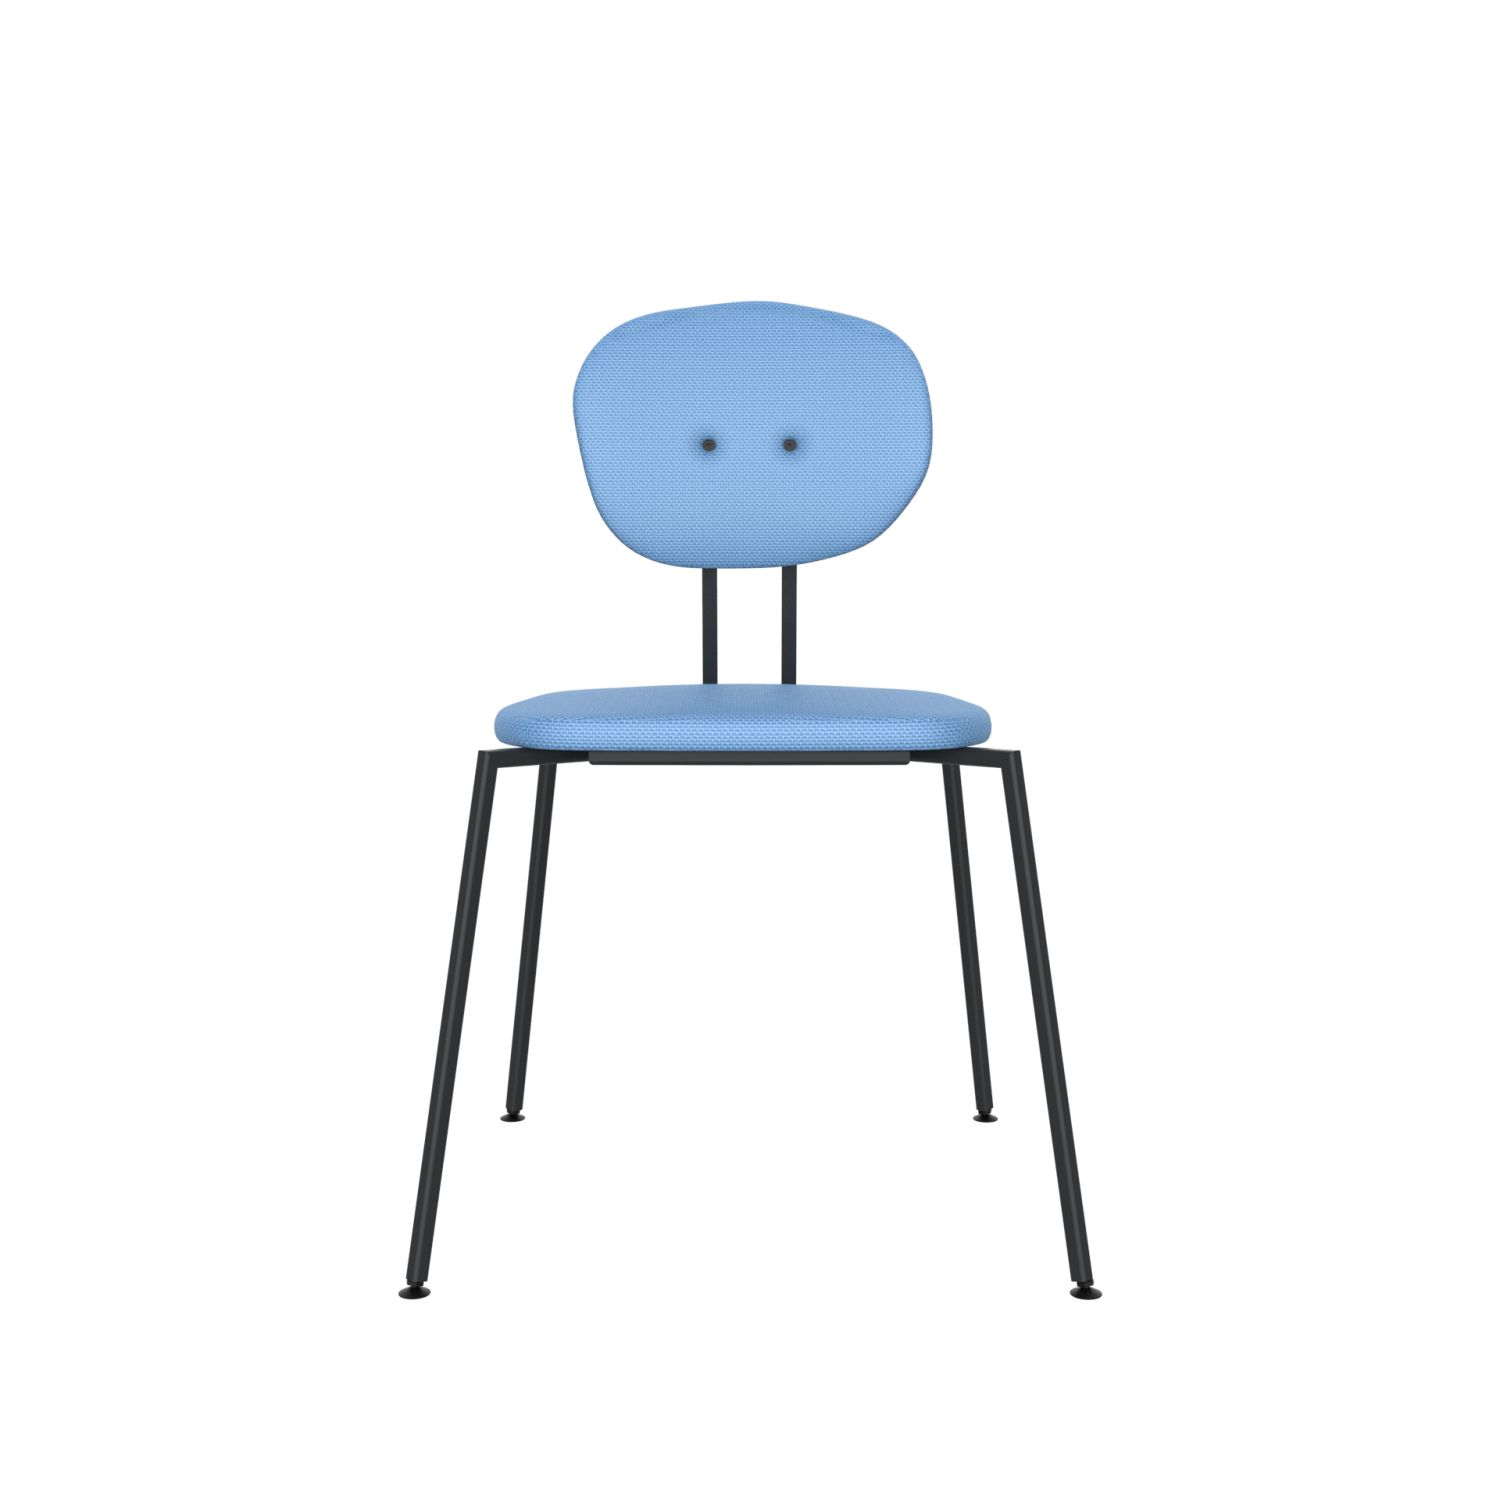 lensvelt maarten baas chair 141 stackable without armrests backrest a blue horizon 040 black ral9005 hard leg ends